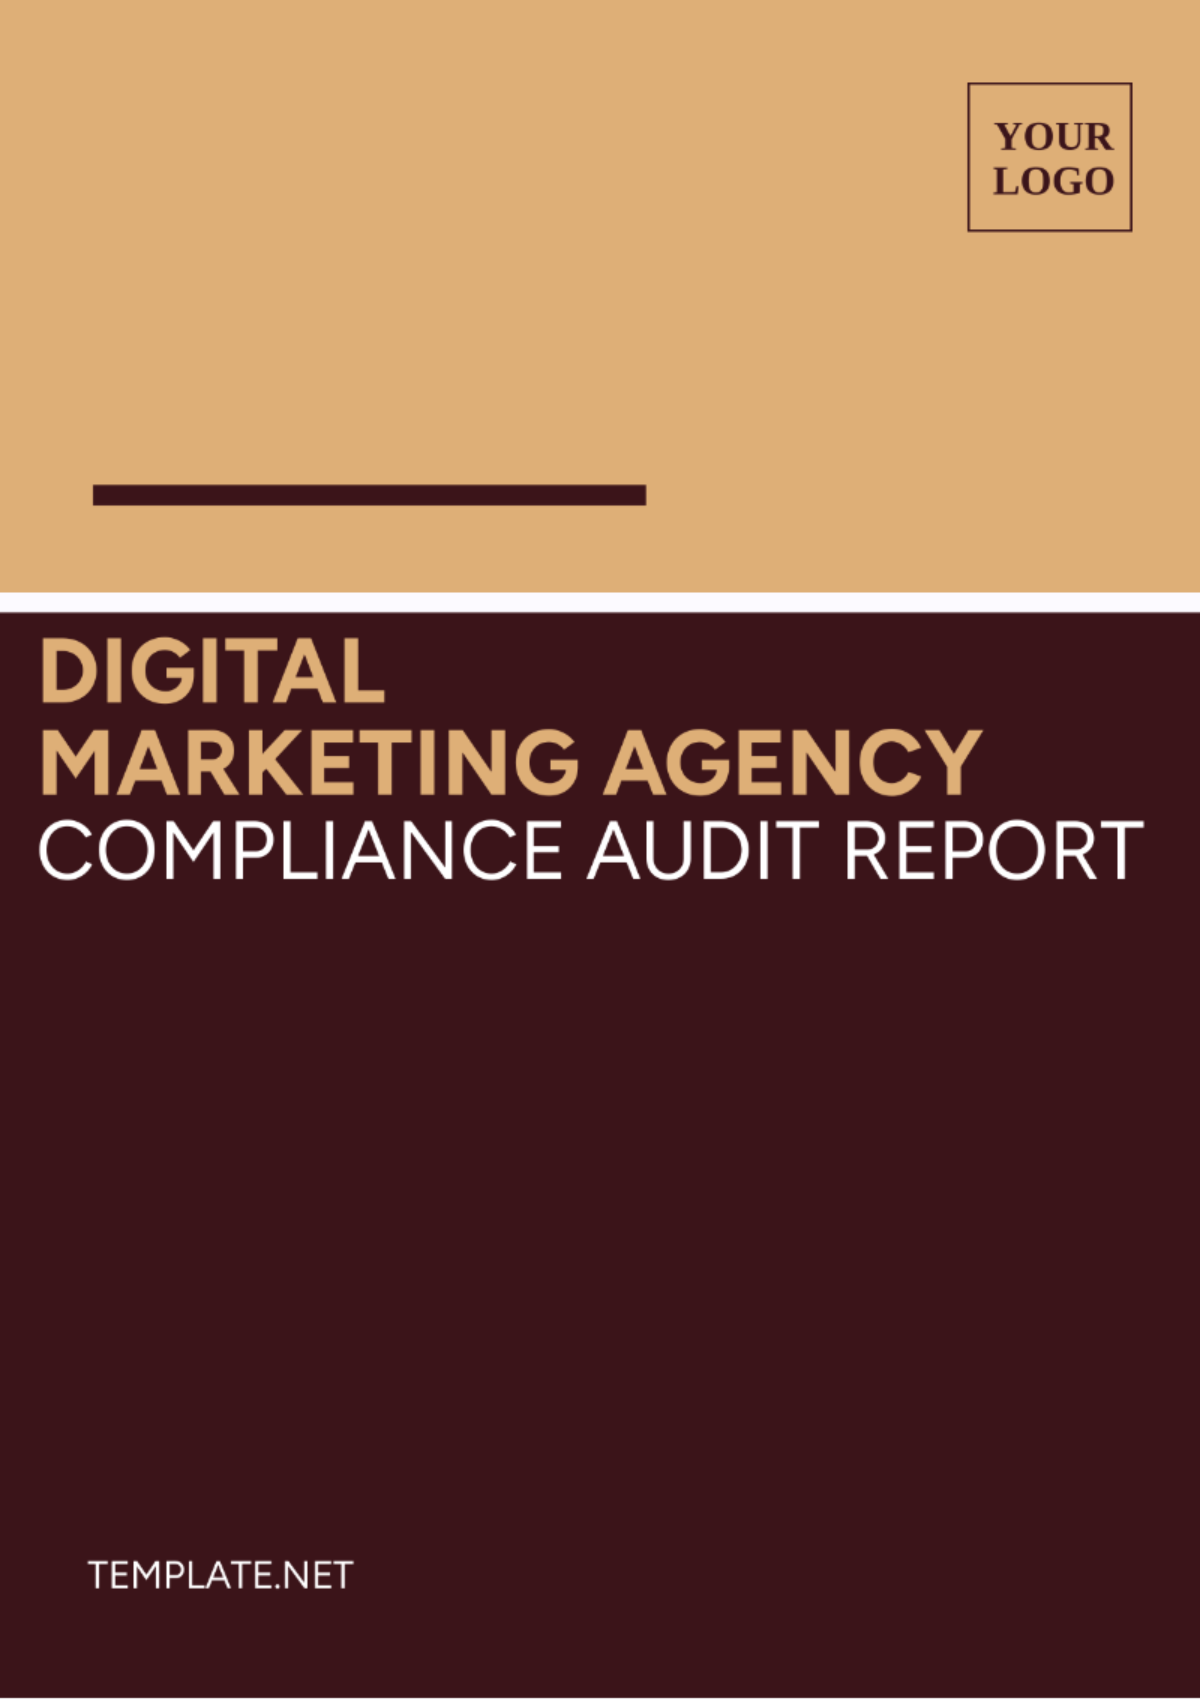 Free Digital Marketing Agency Compliance Audit Report Template